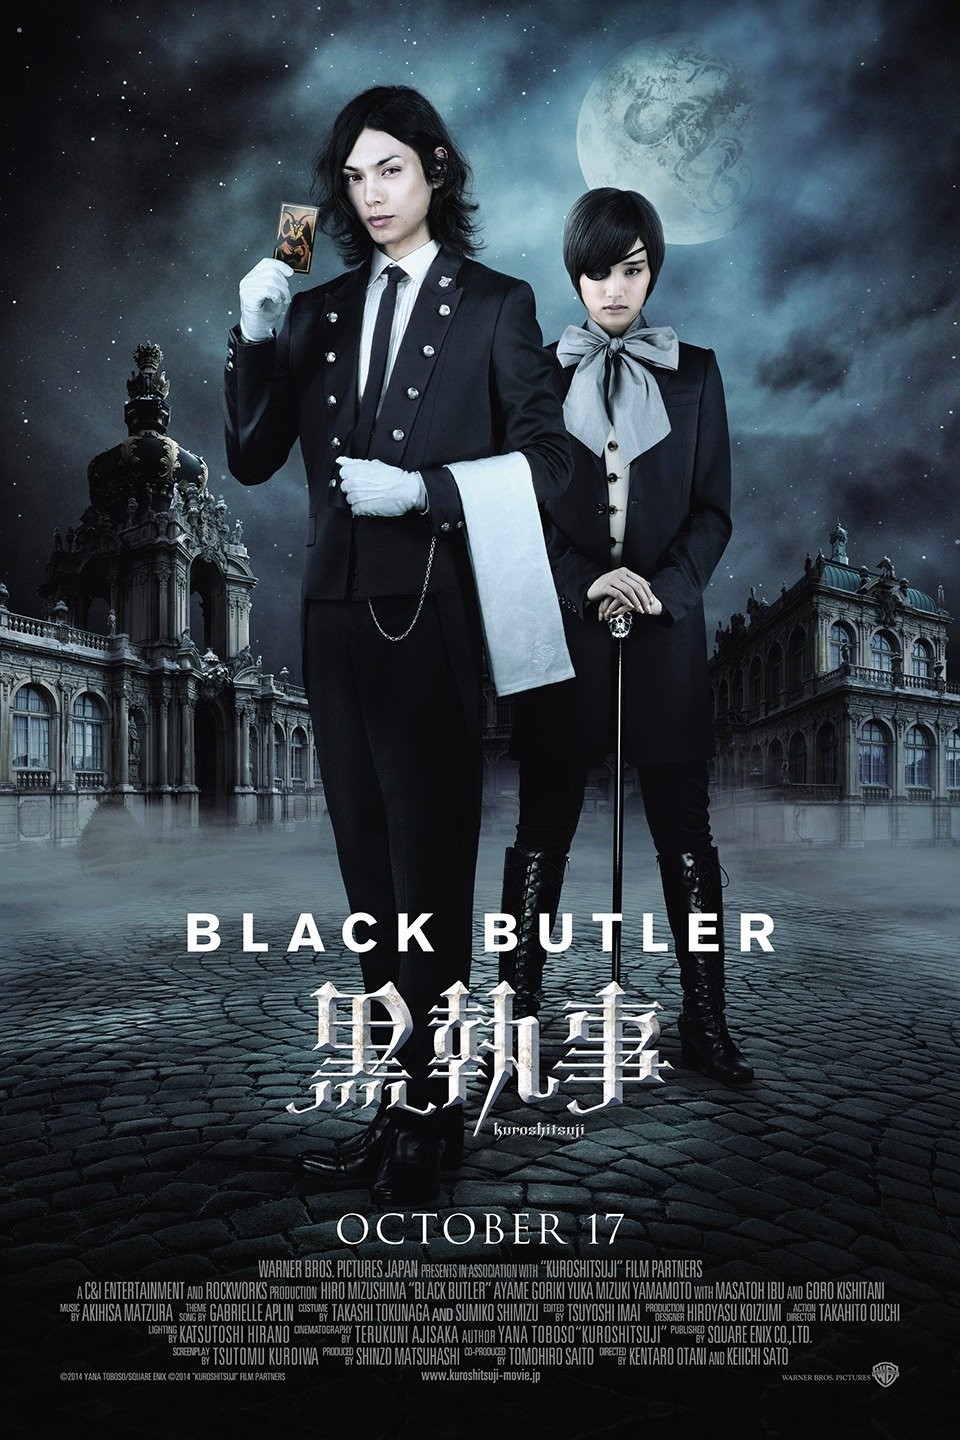 Black Butler Season 4: Release Date, Trailer, and Watch Order